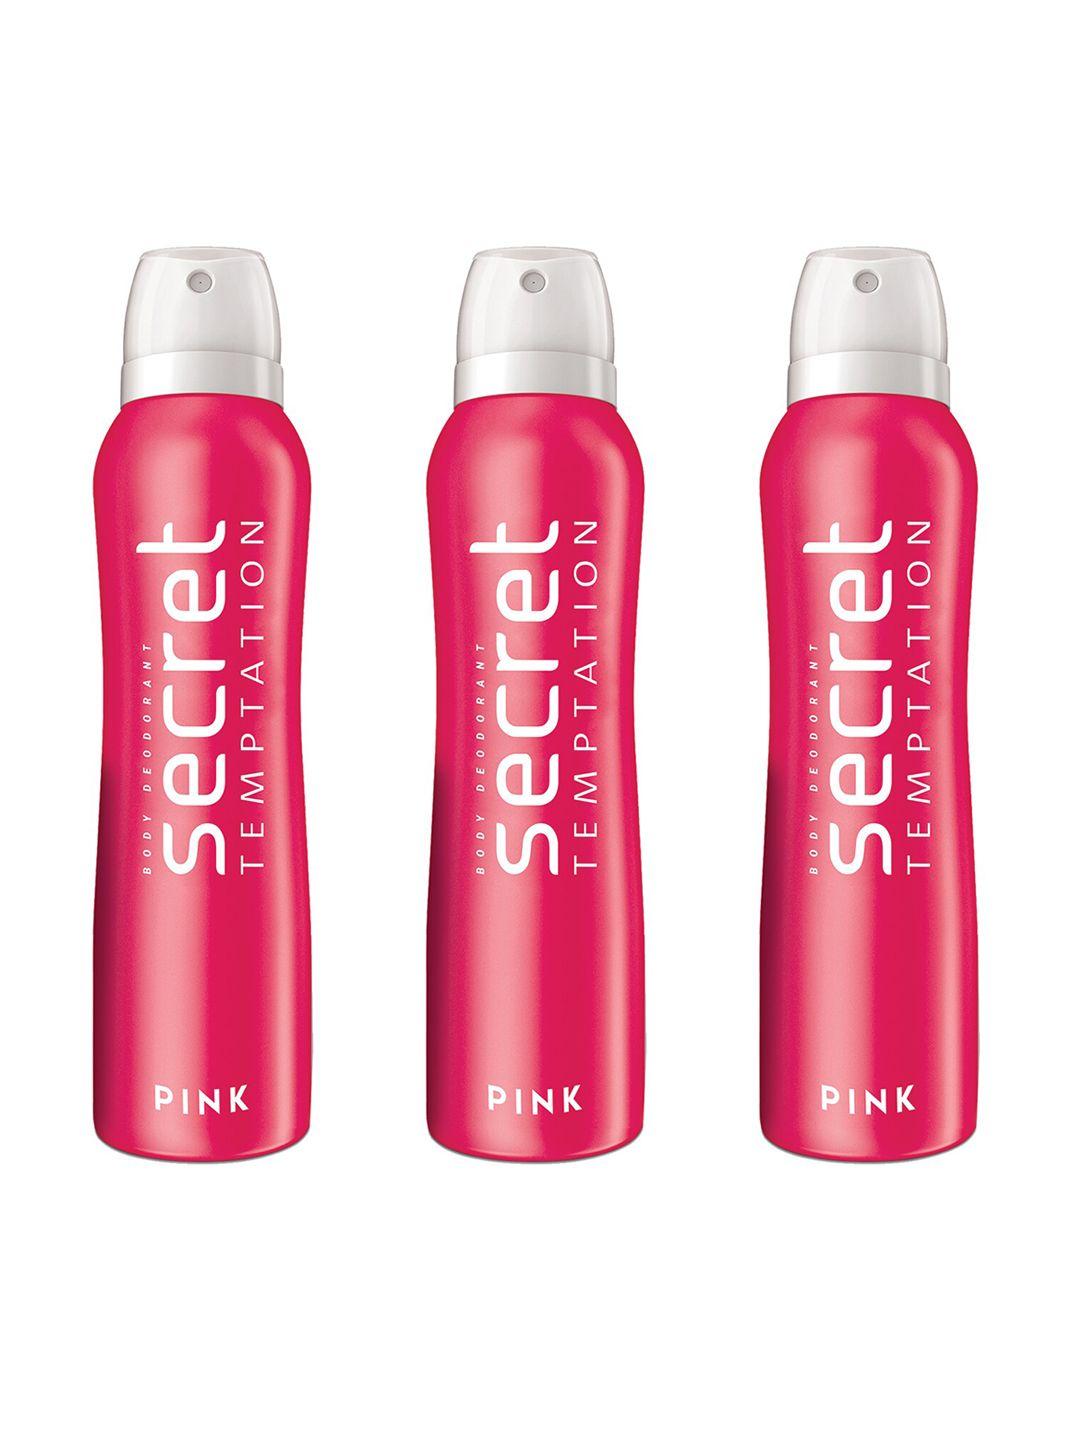 secret temptation women pink deodorant set of 3-150ml each